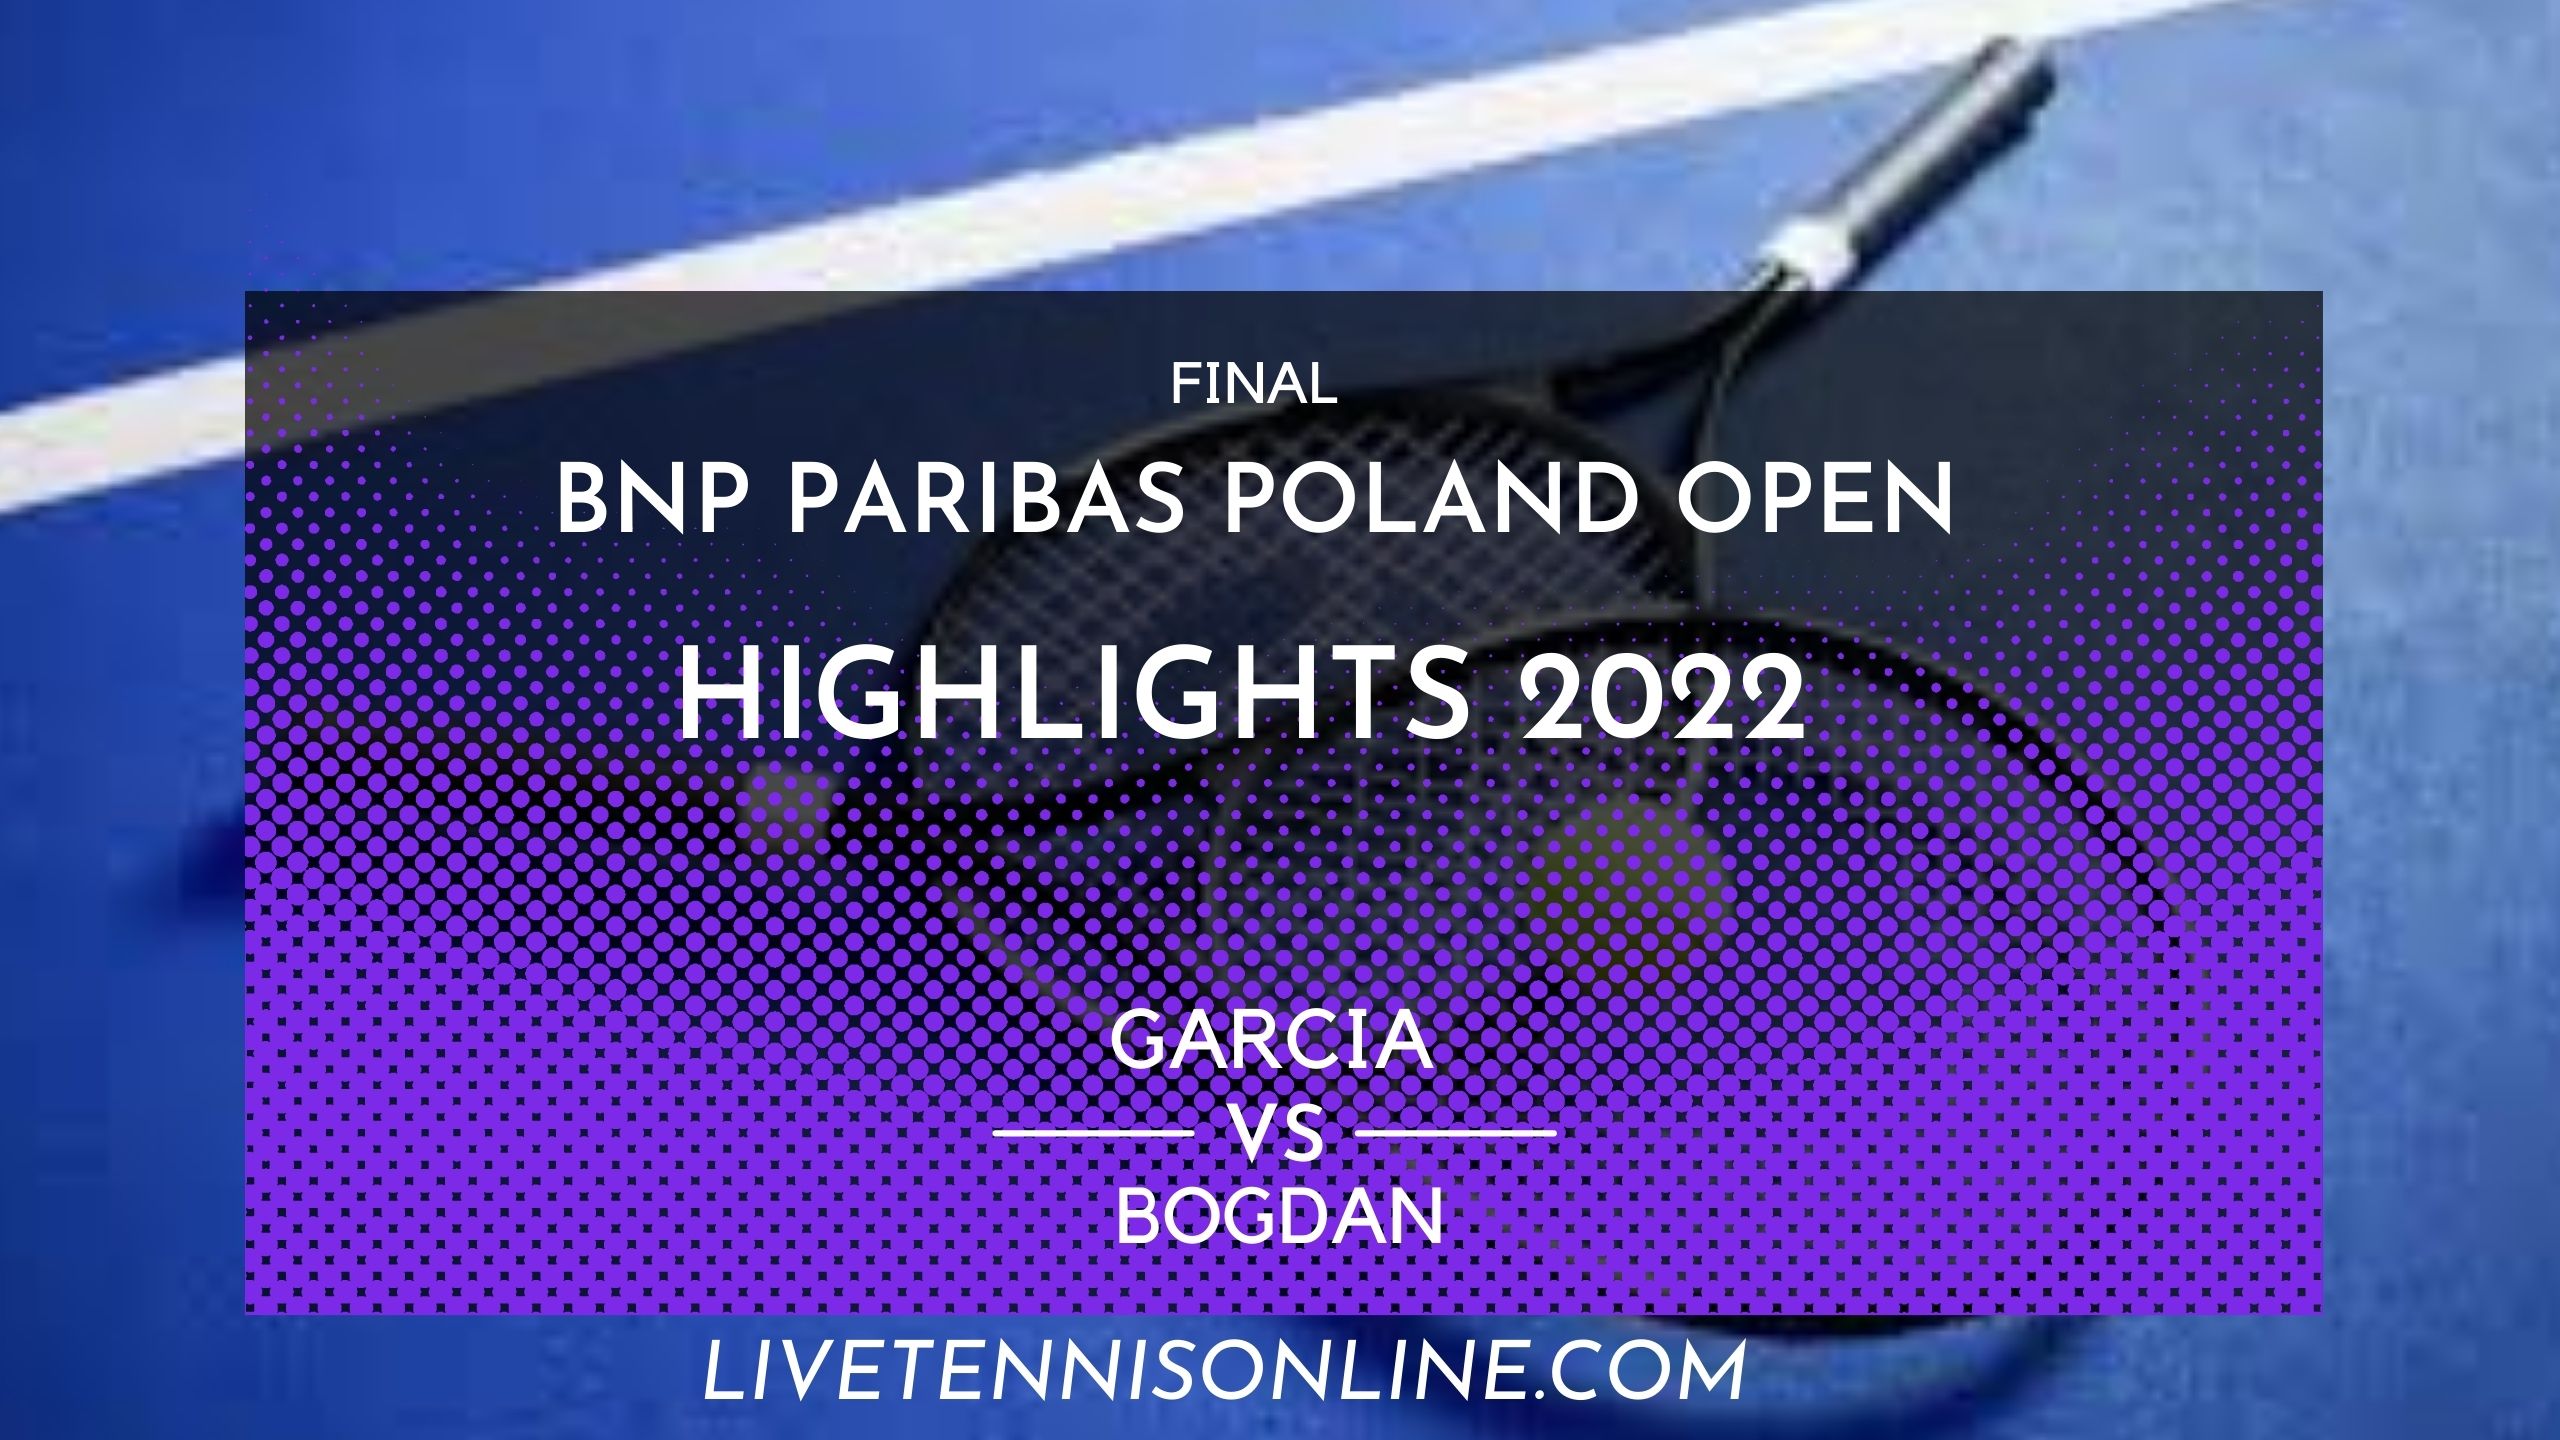 Garcia Vs Bogdan Final Highlights 2022 Poland Open